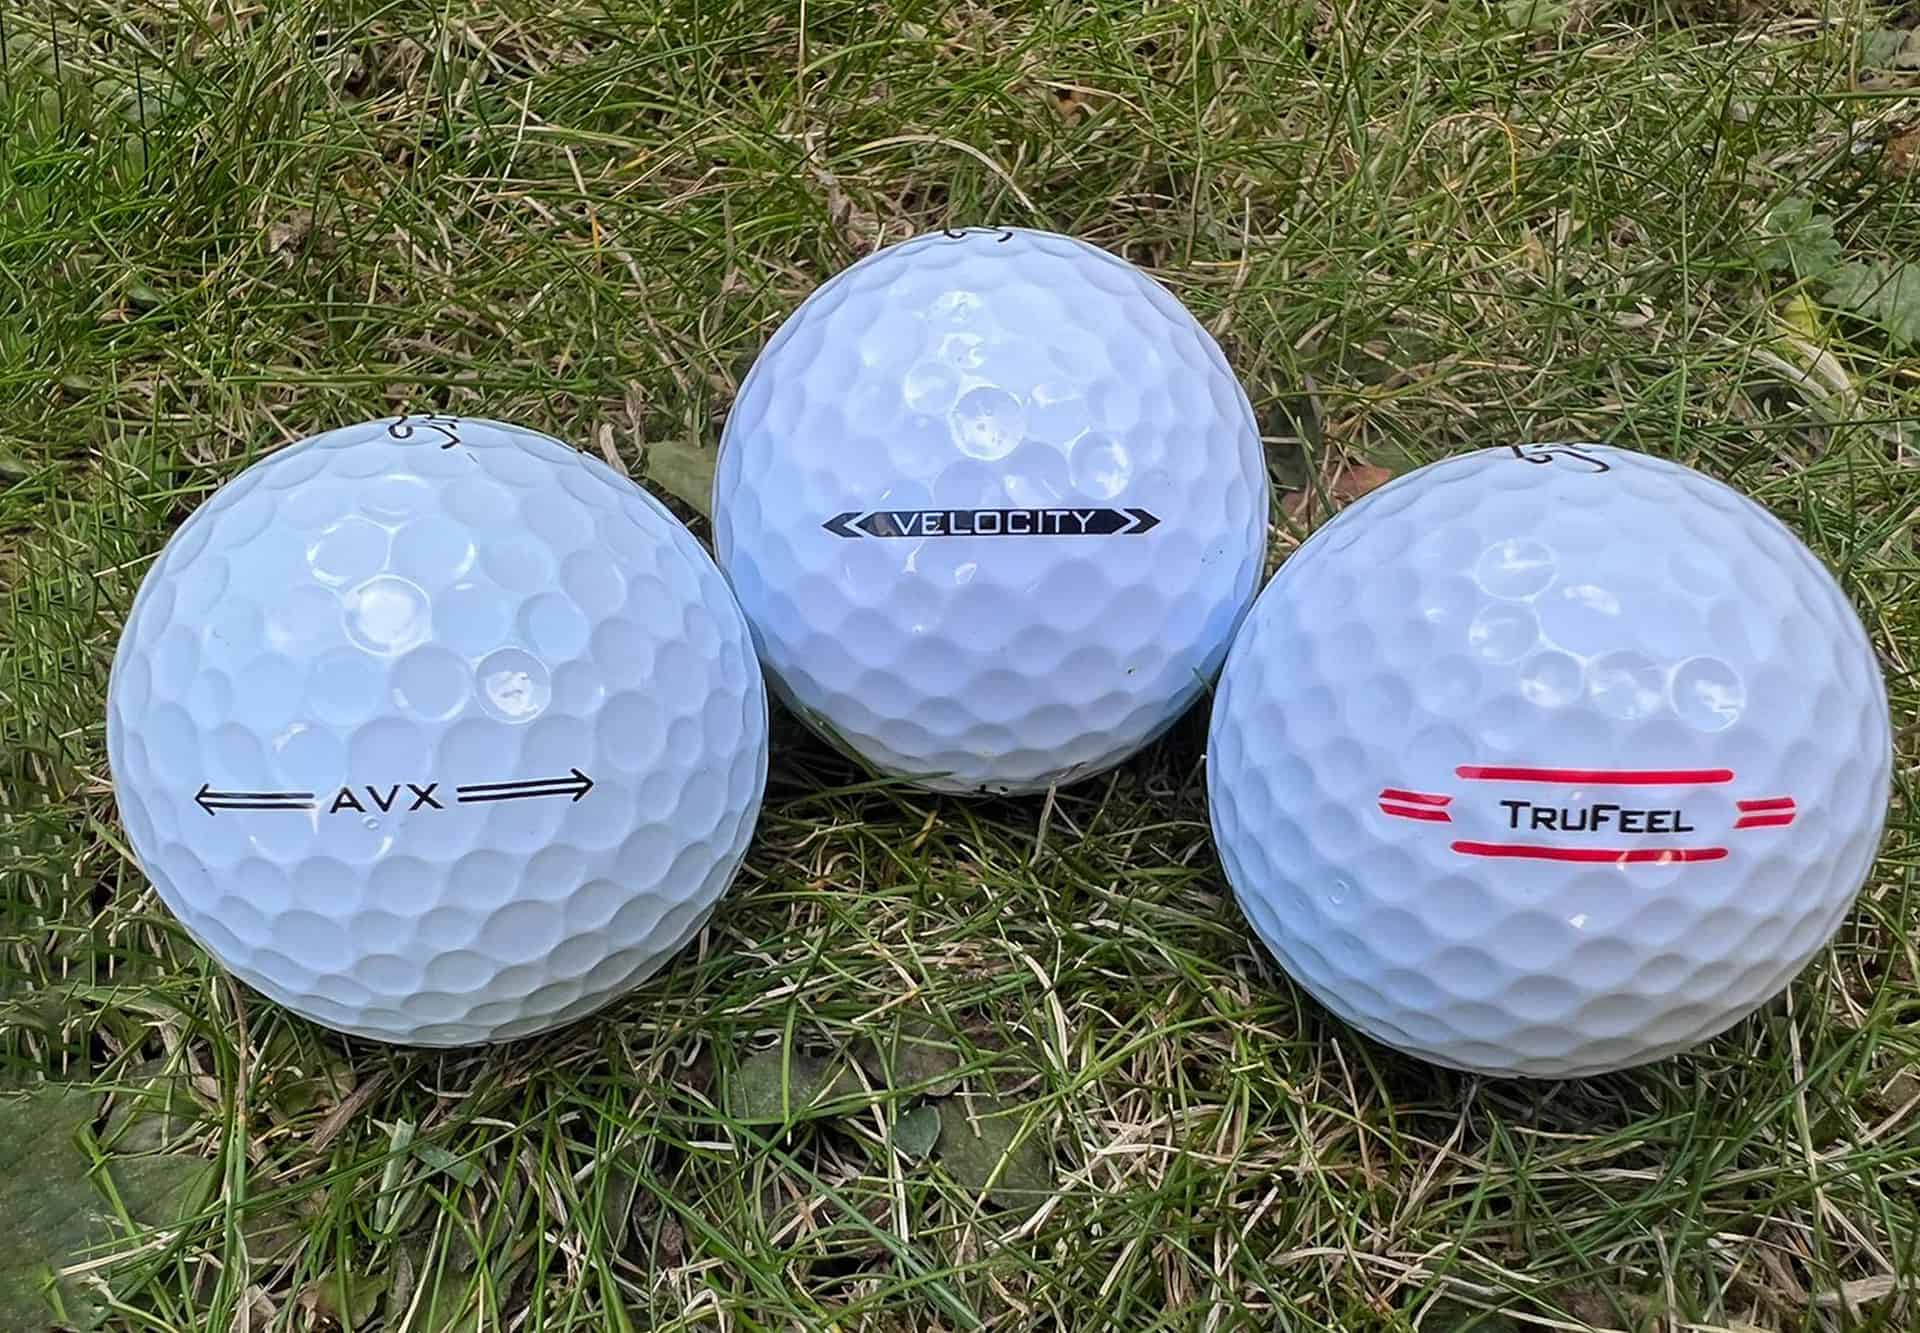 Titleist velocity golf balls